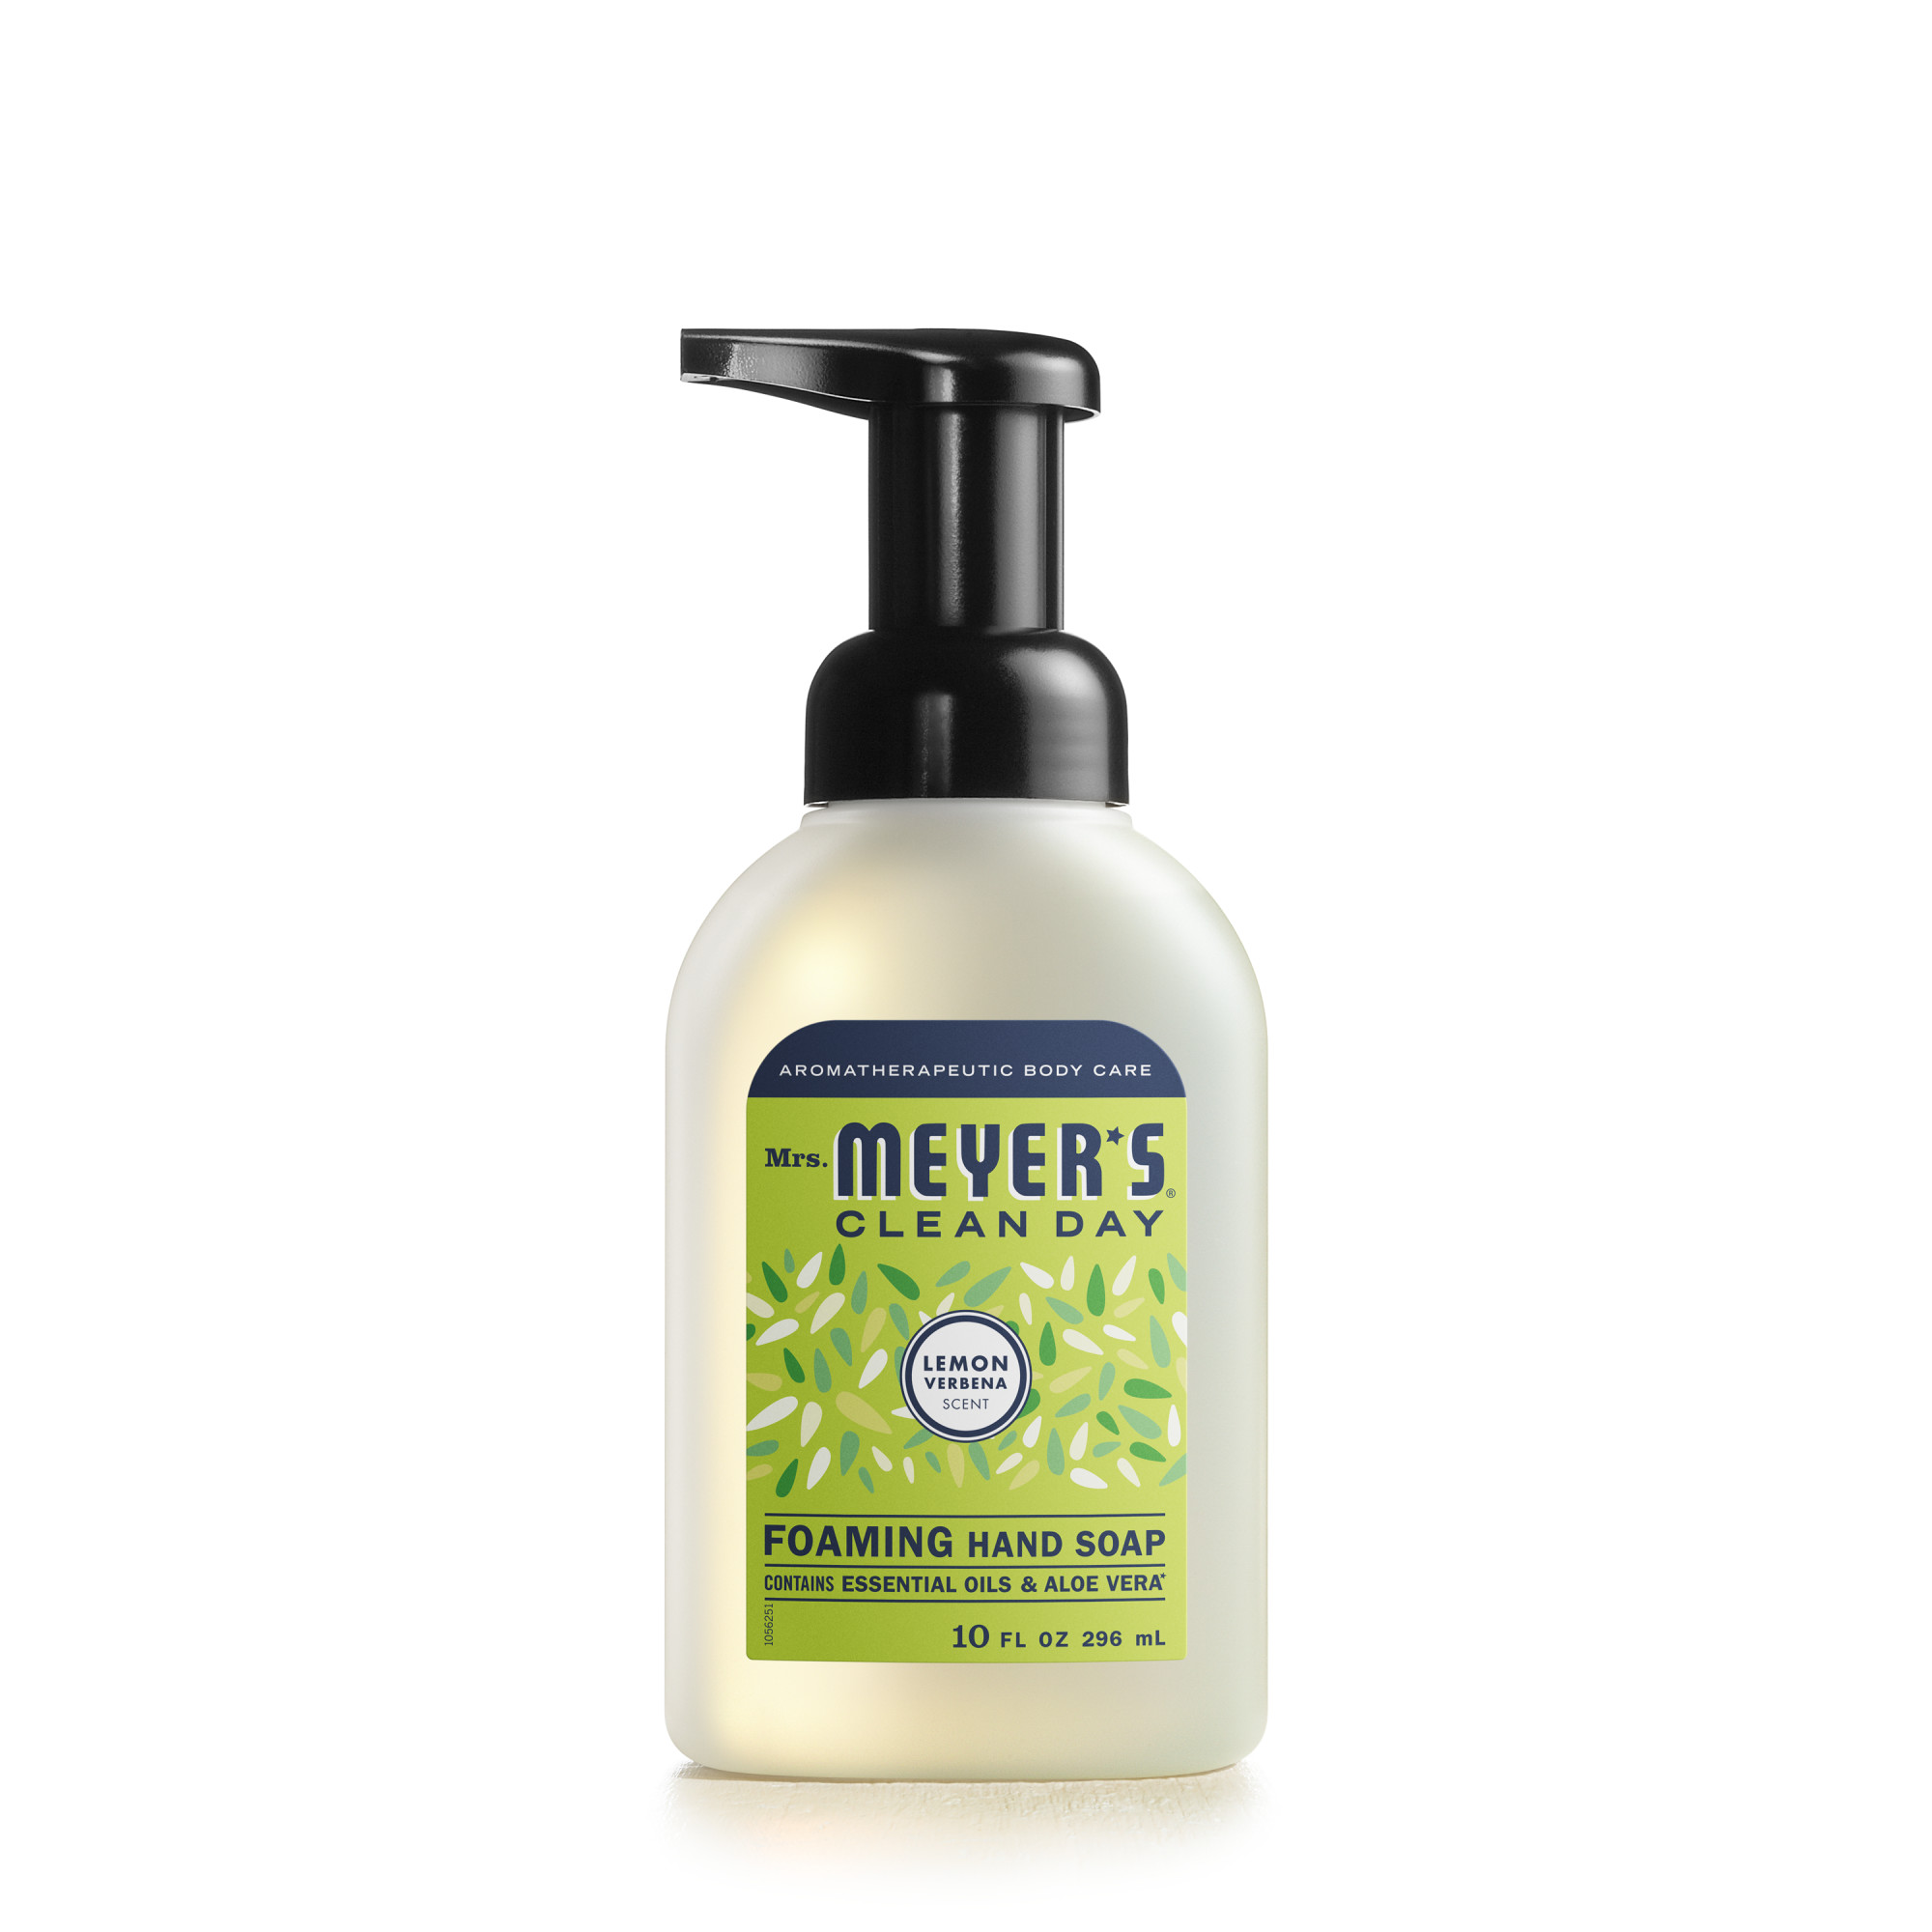 Mrs. Meyer's Clean Day Foaming Hand Soap, Lemon Verbena Scent, 10 fl oz - image 1 of 5